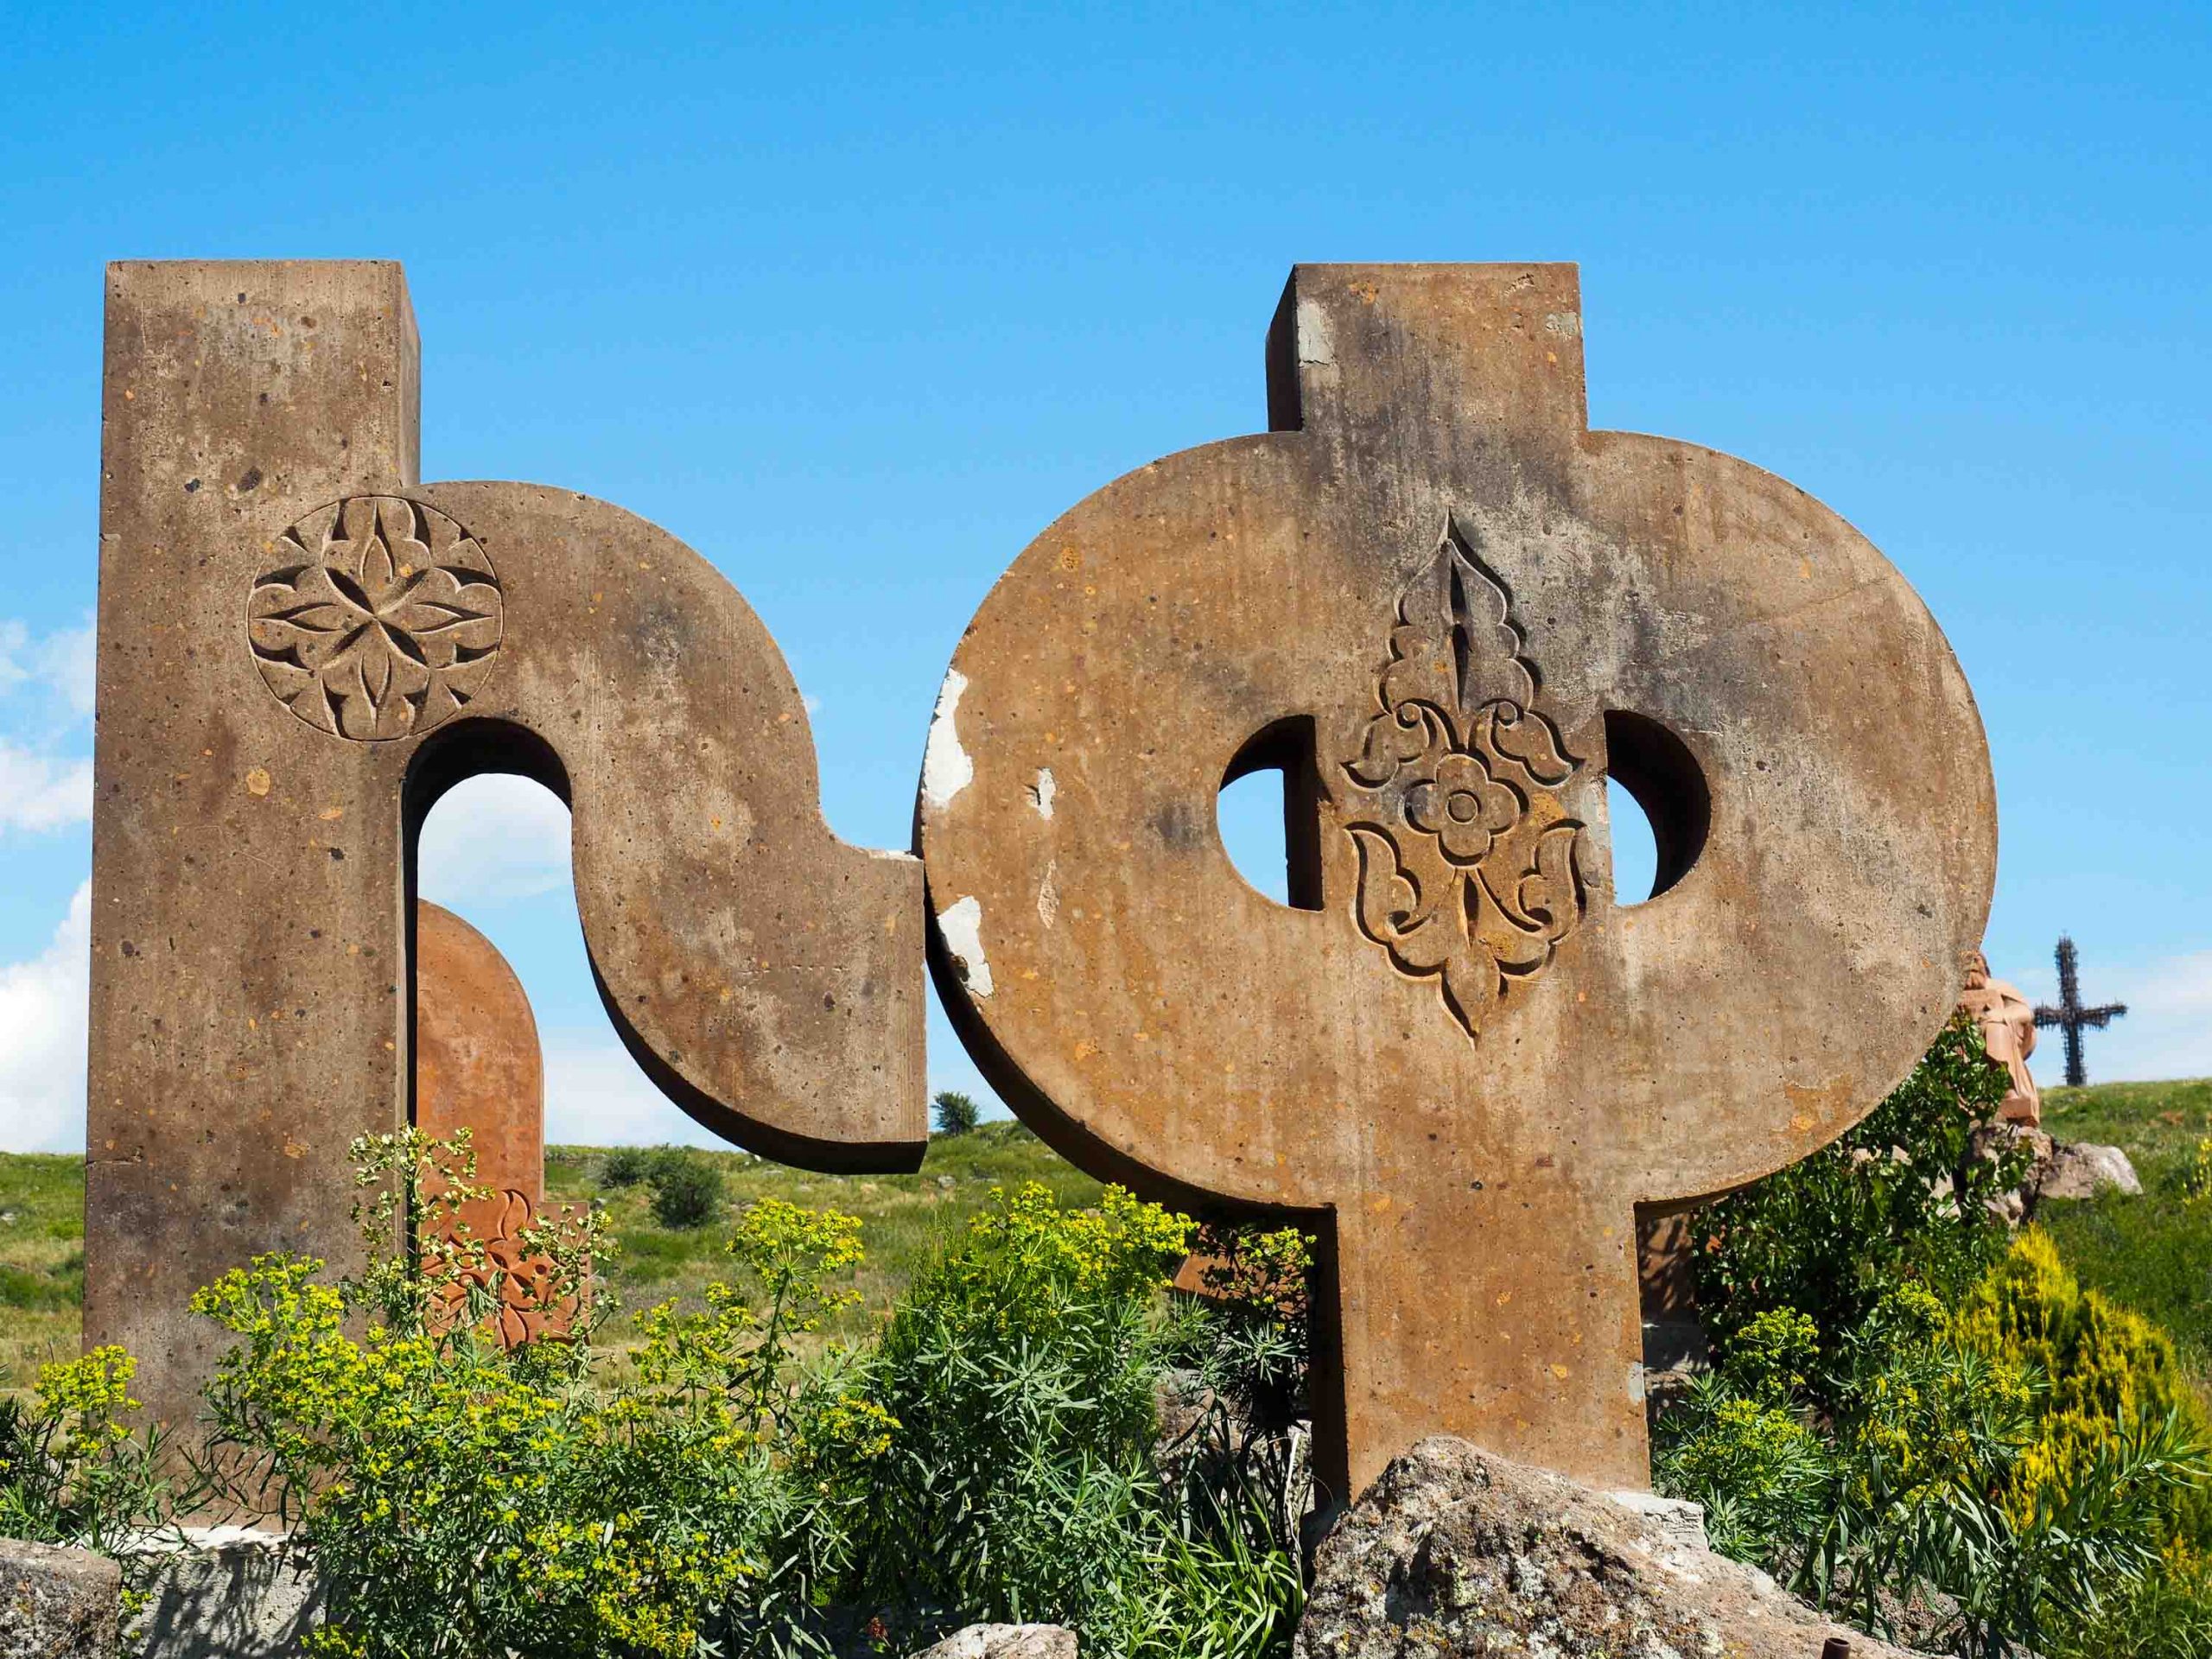 Armenian alphabet - History of Armenian writing - ArmGeo